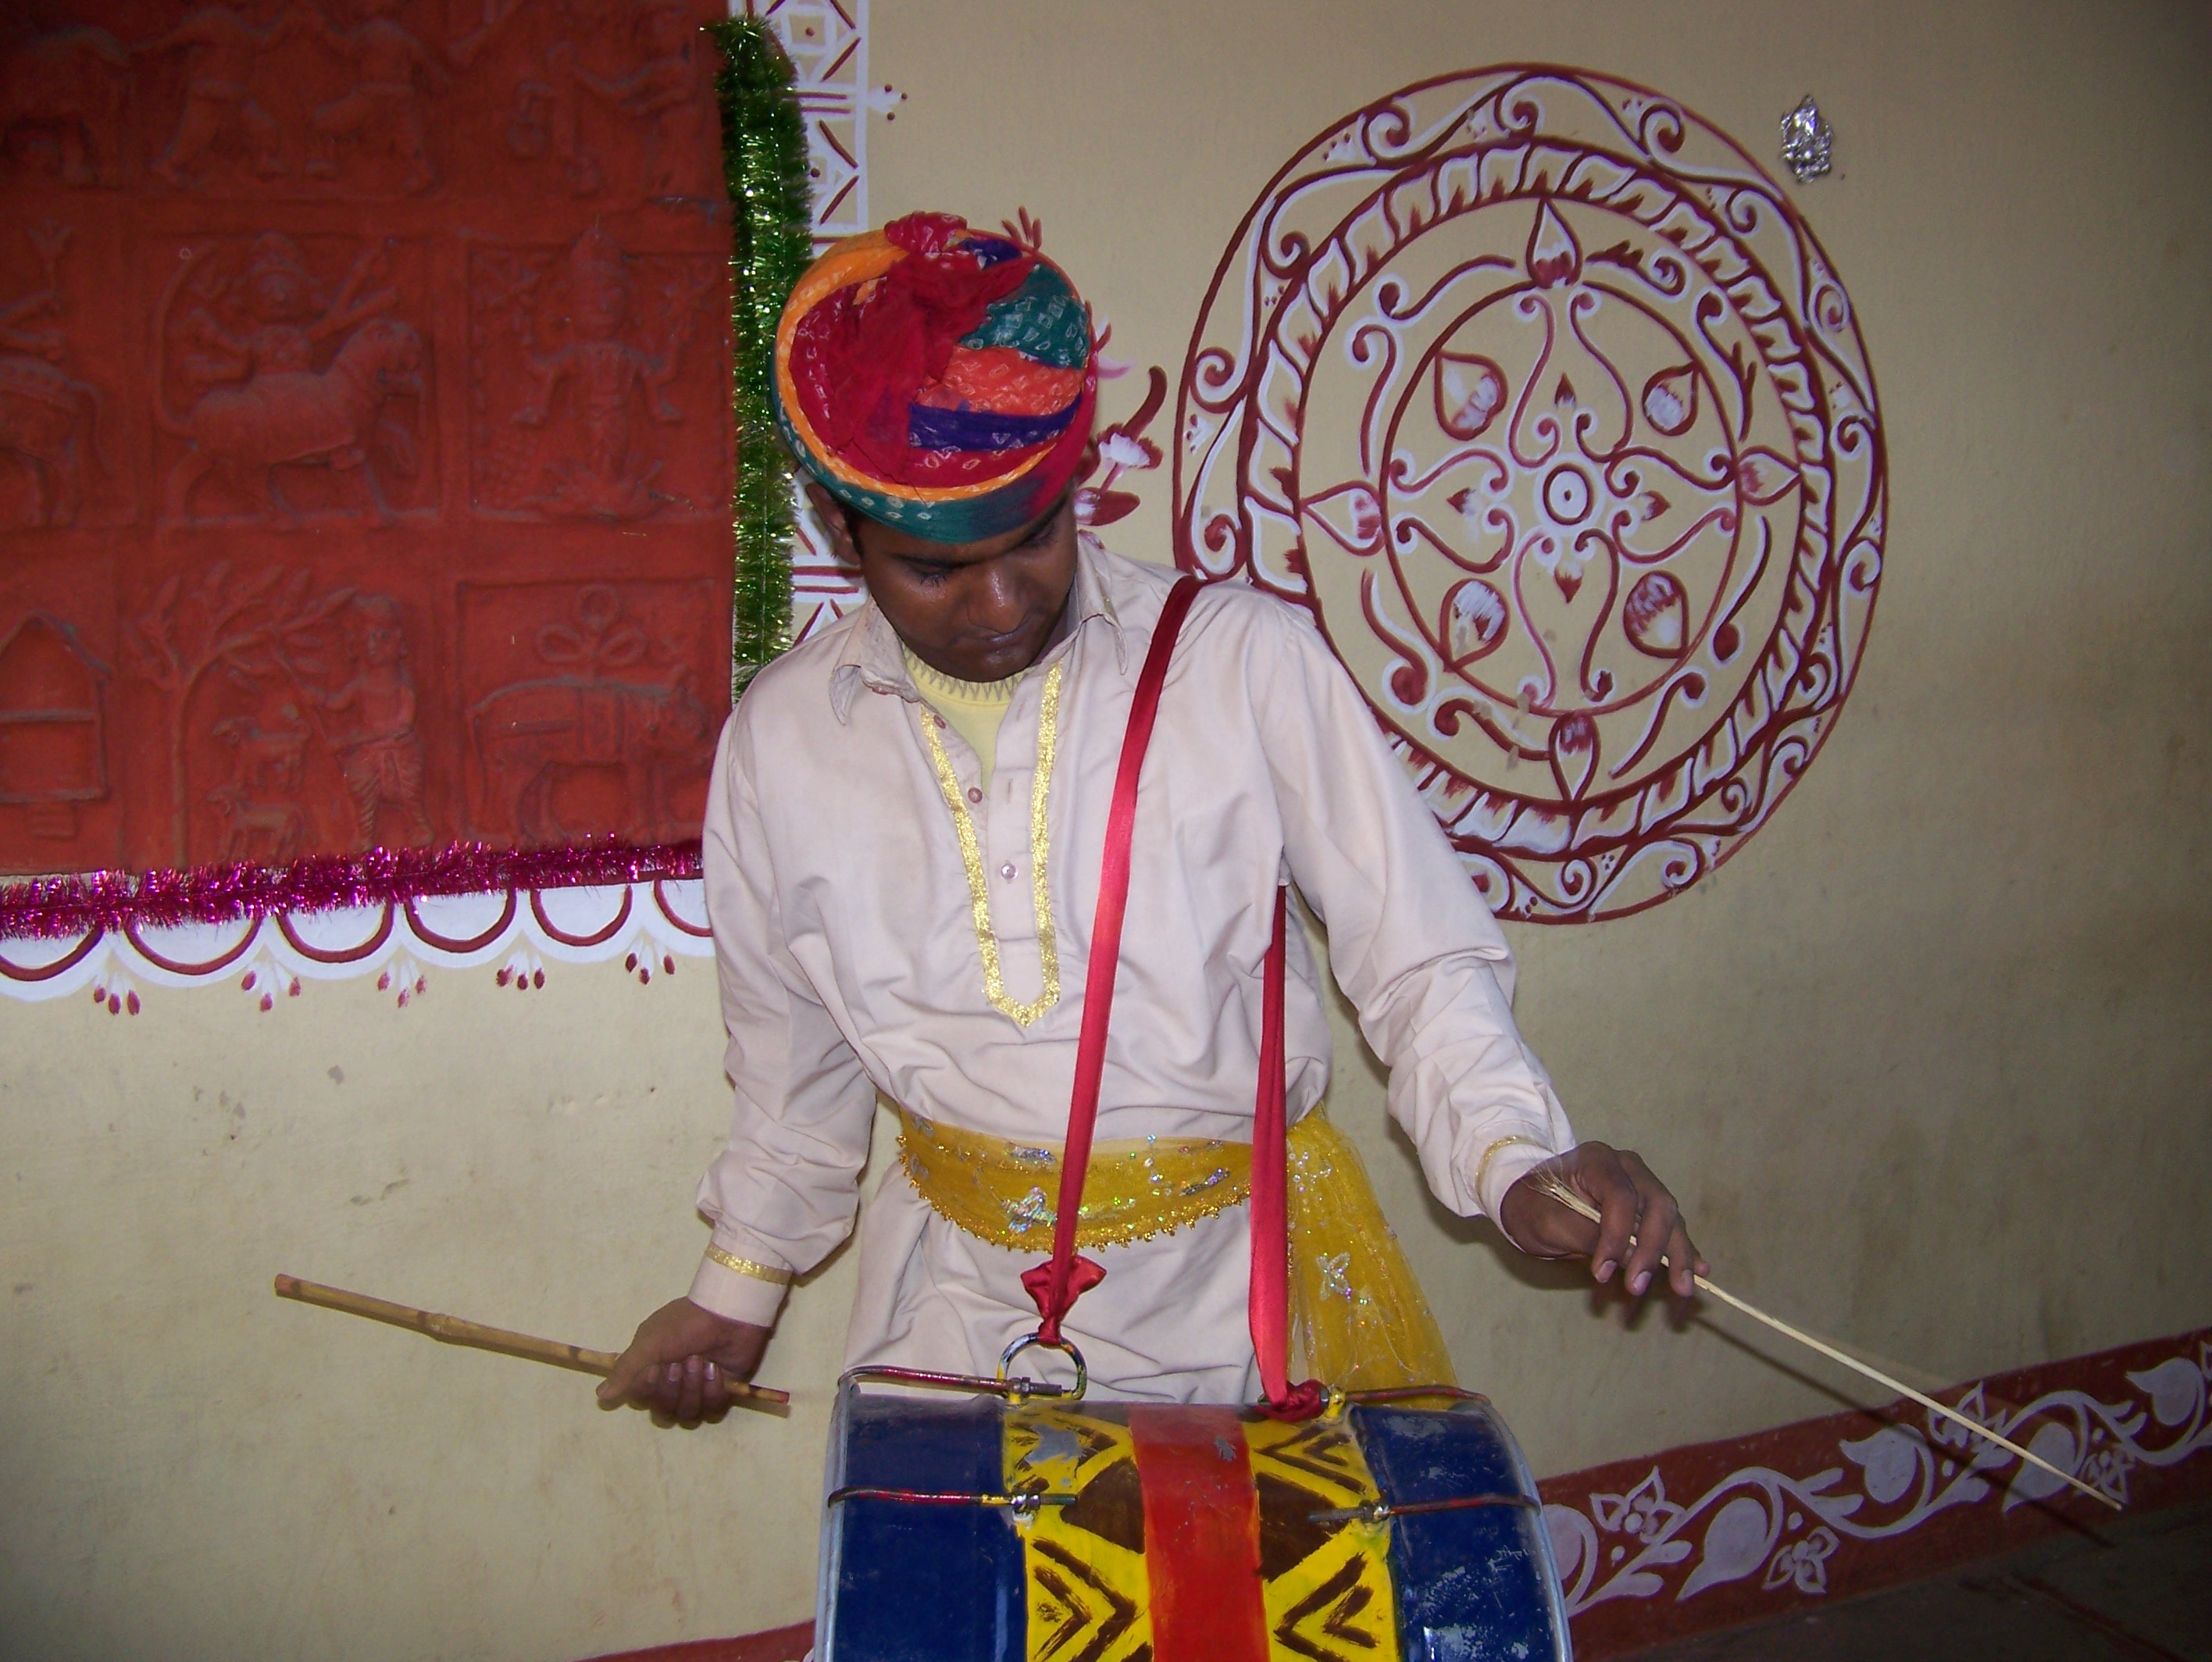 Traditional Rajasthani dhol at PADHARO SE musical show on 25th December 2008